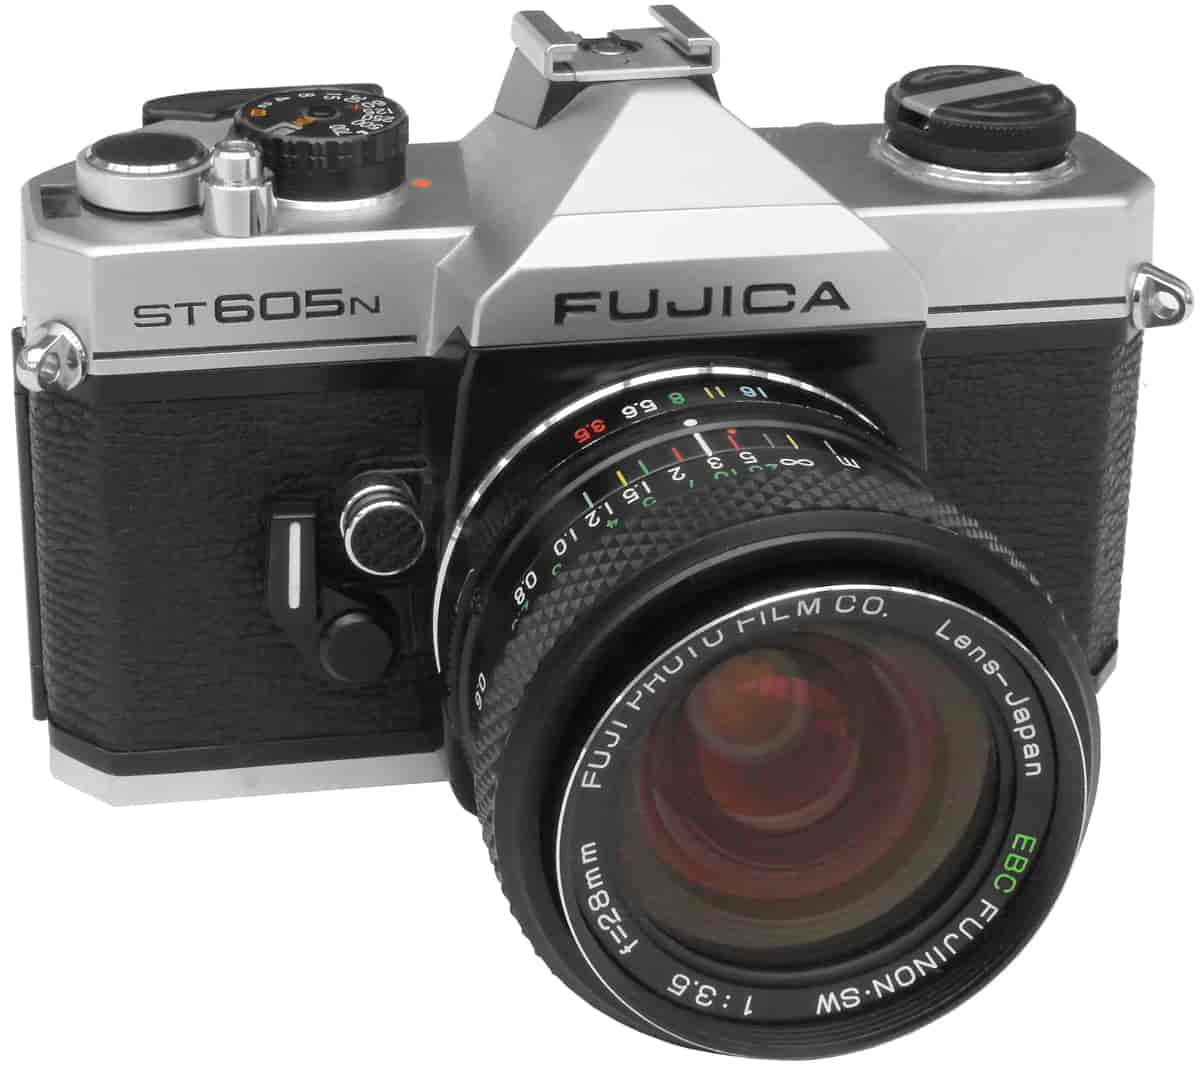 Fujica ST605N analogt speilreflekskamera med 28 mm 1:3.5 vidvinkel.